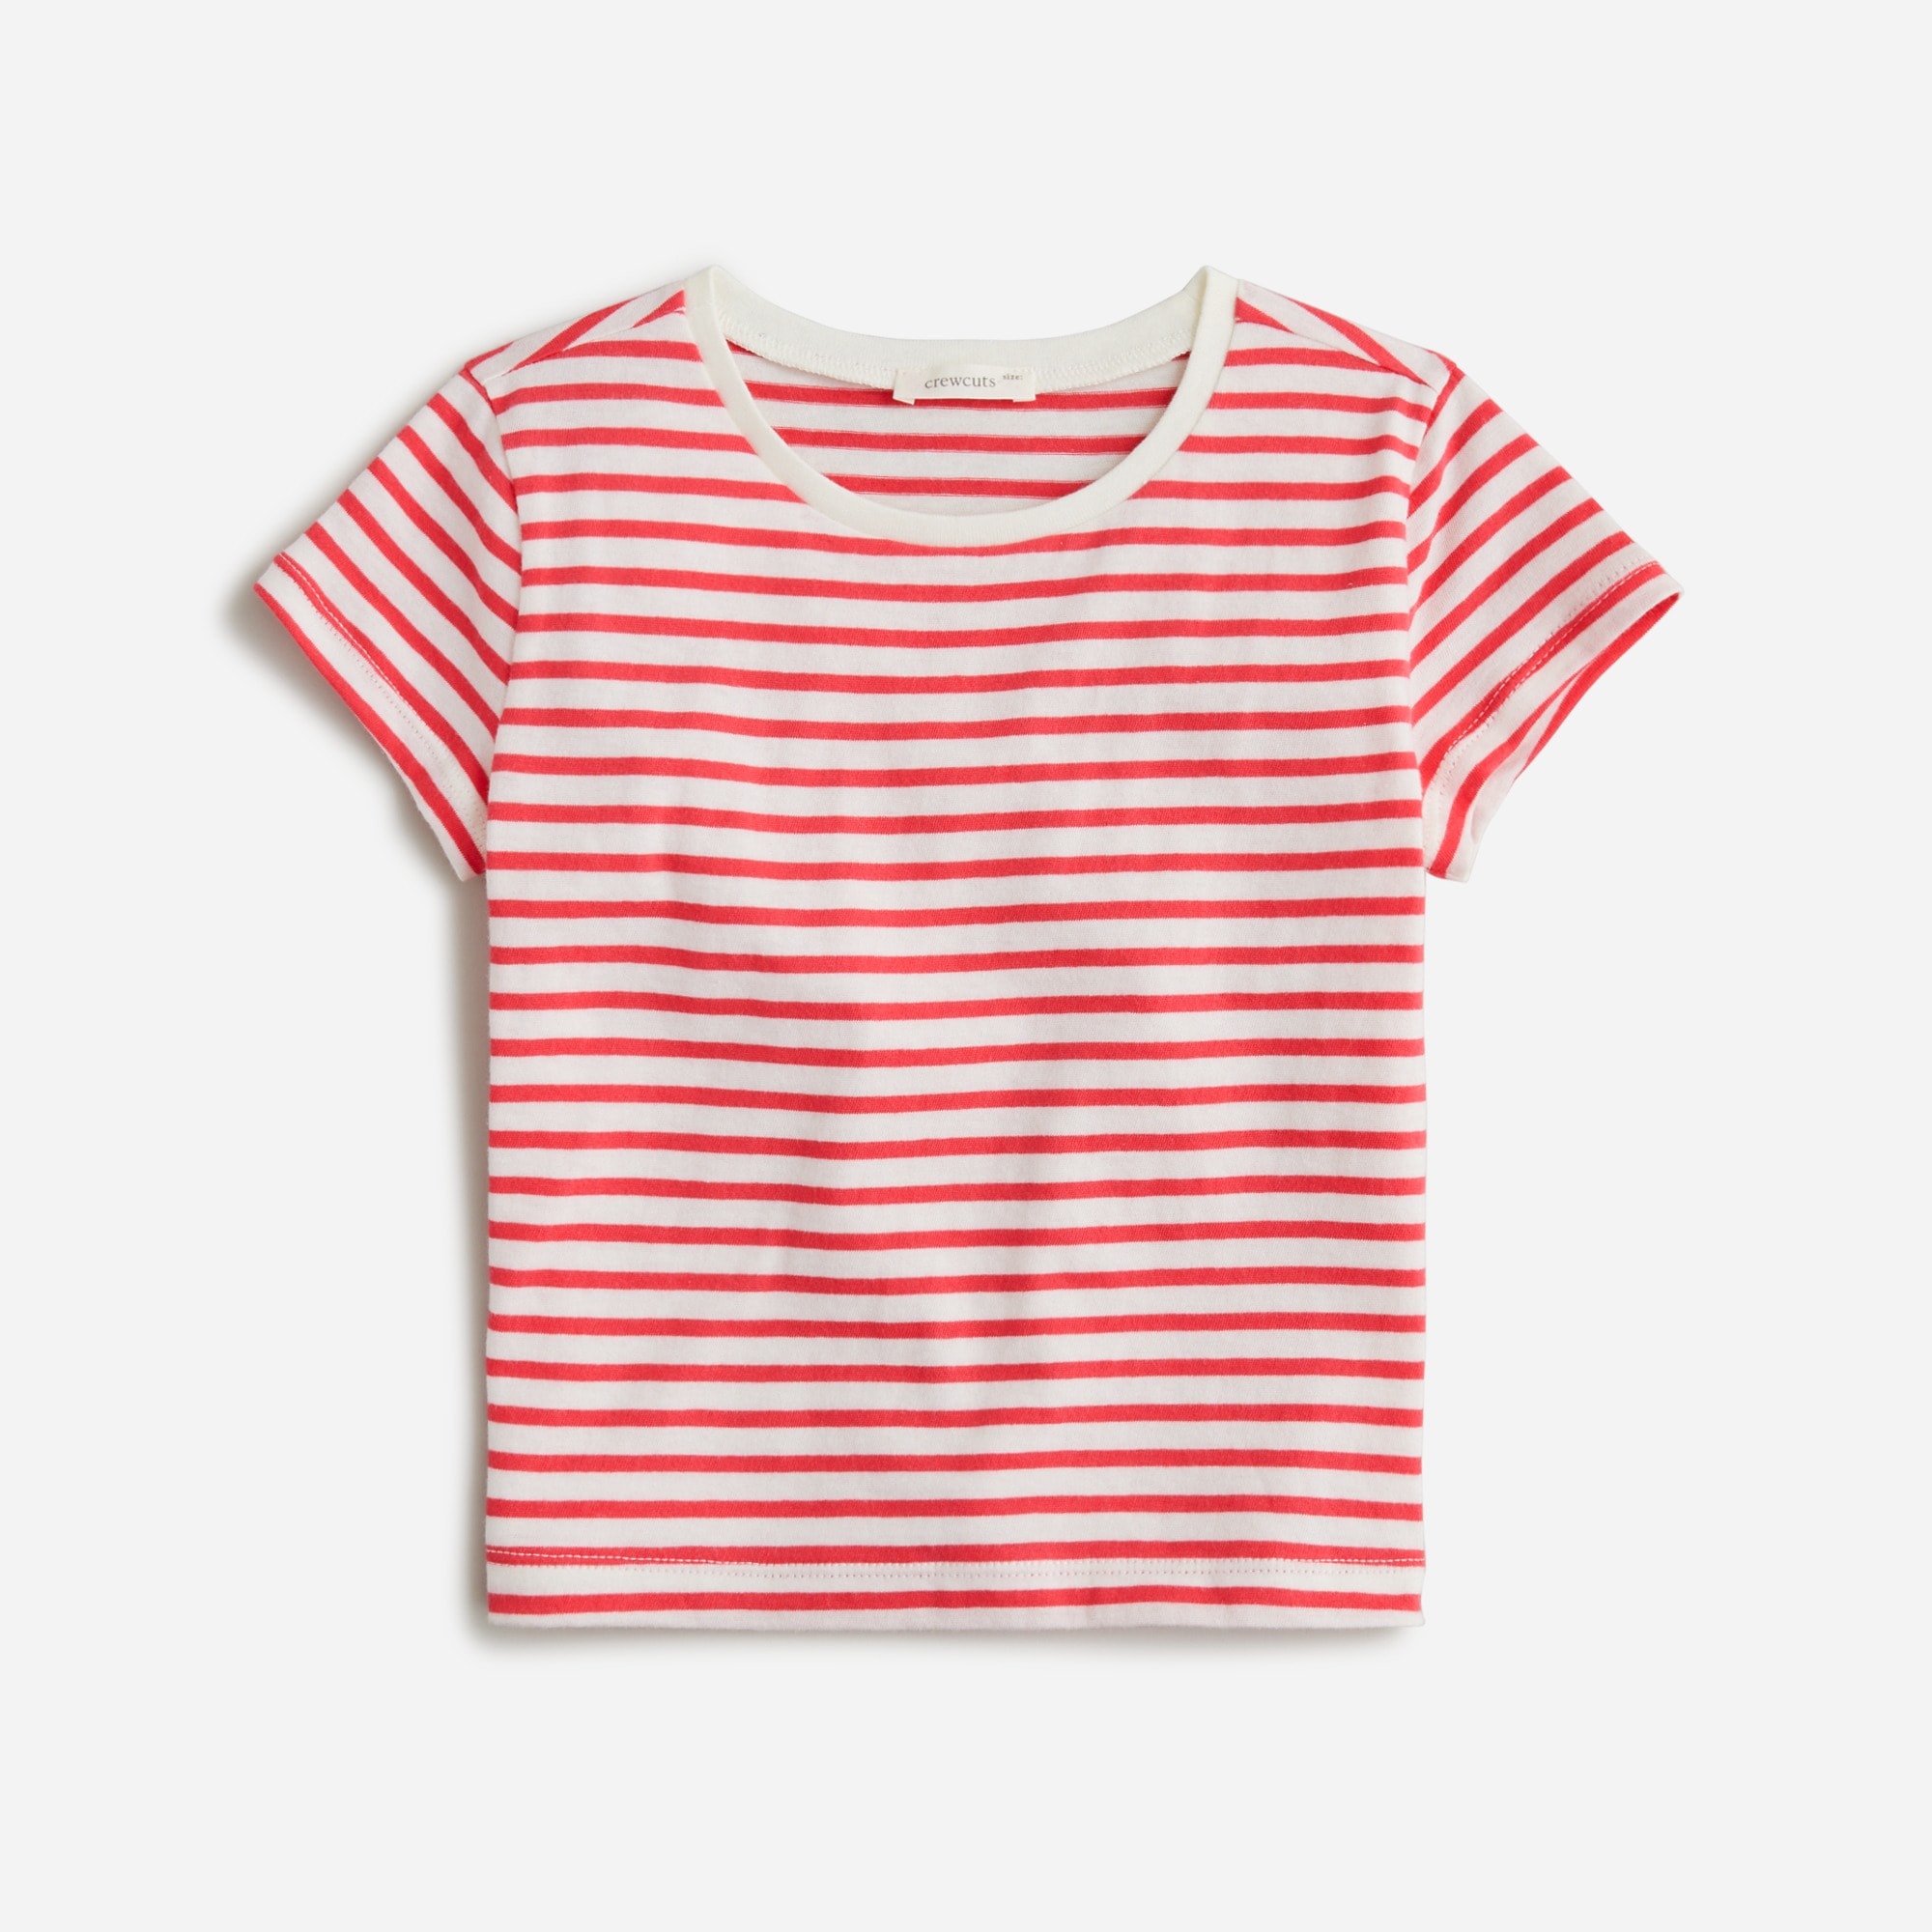 girls Girls' shrunken T-shirt in striped vintage jersey